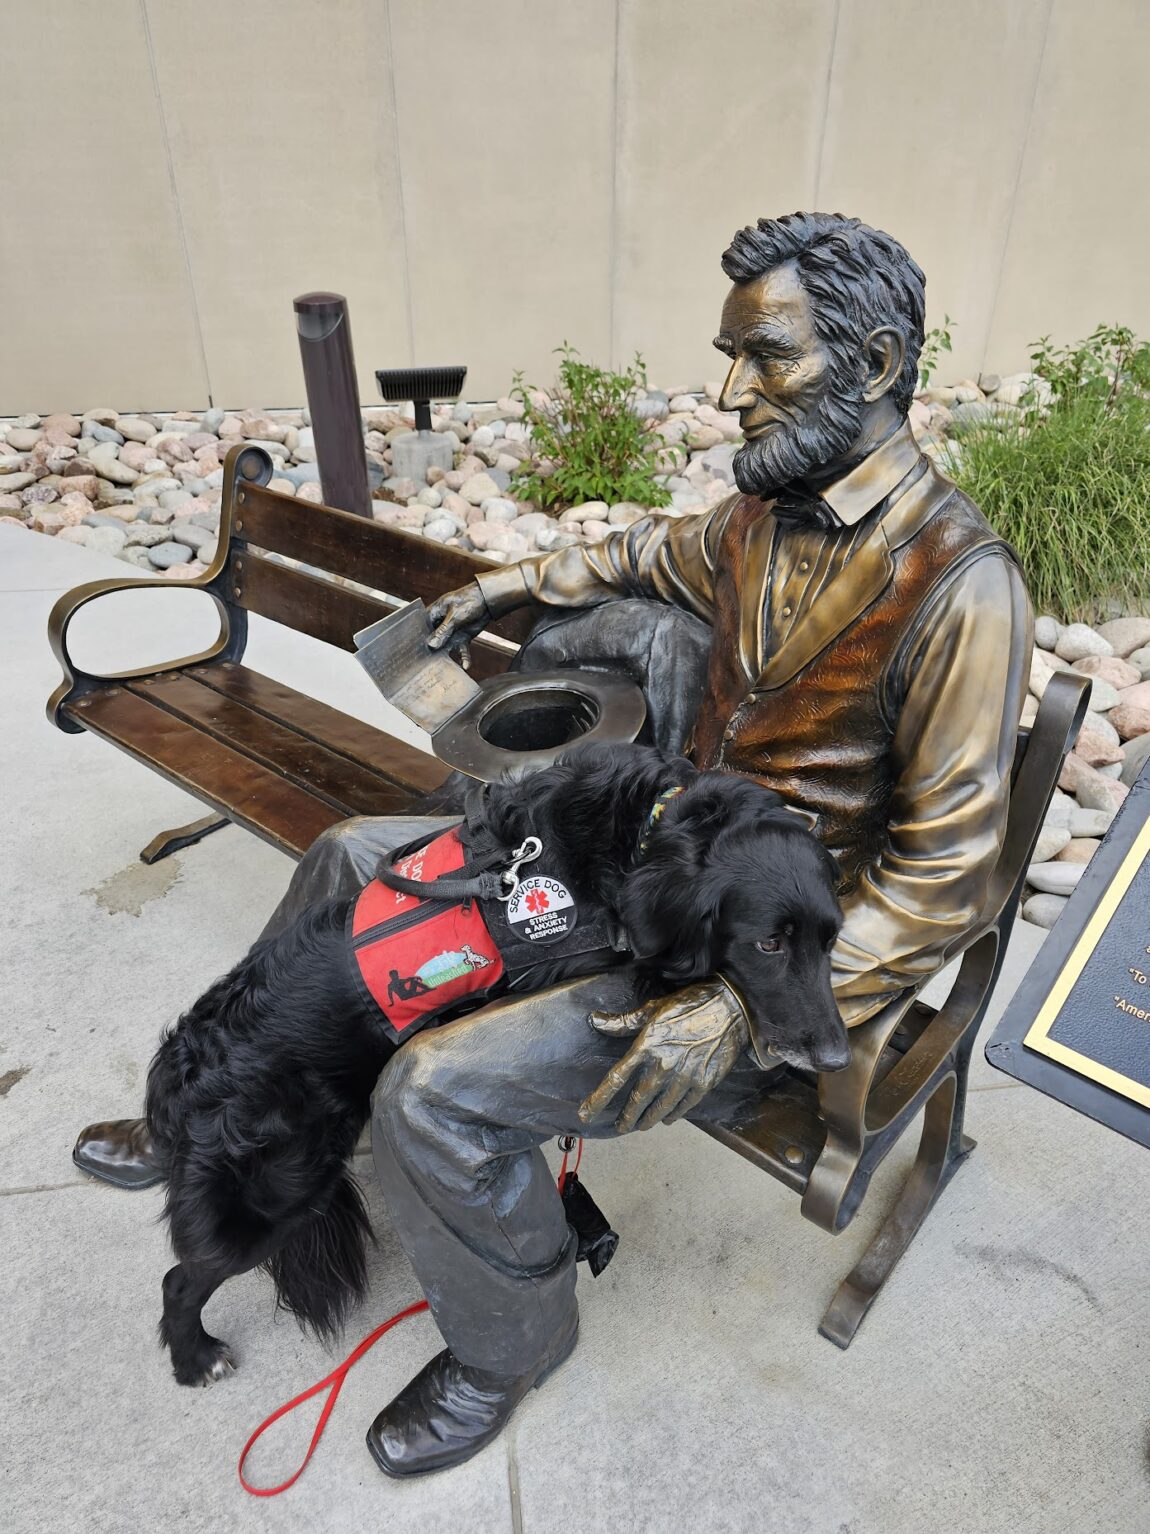 Siri the Service Dog applies pressure on Lincoln